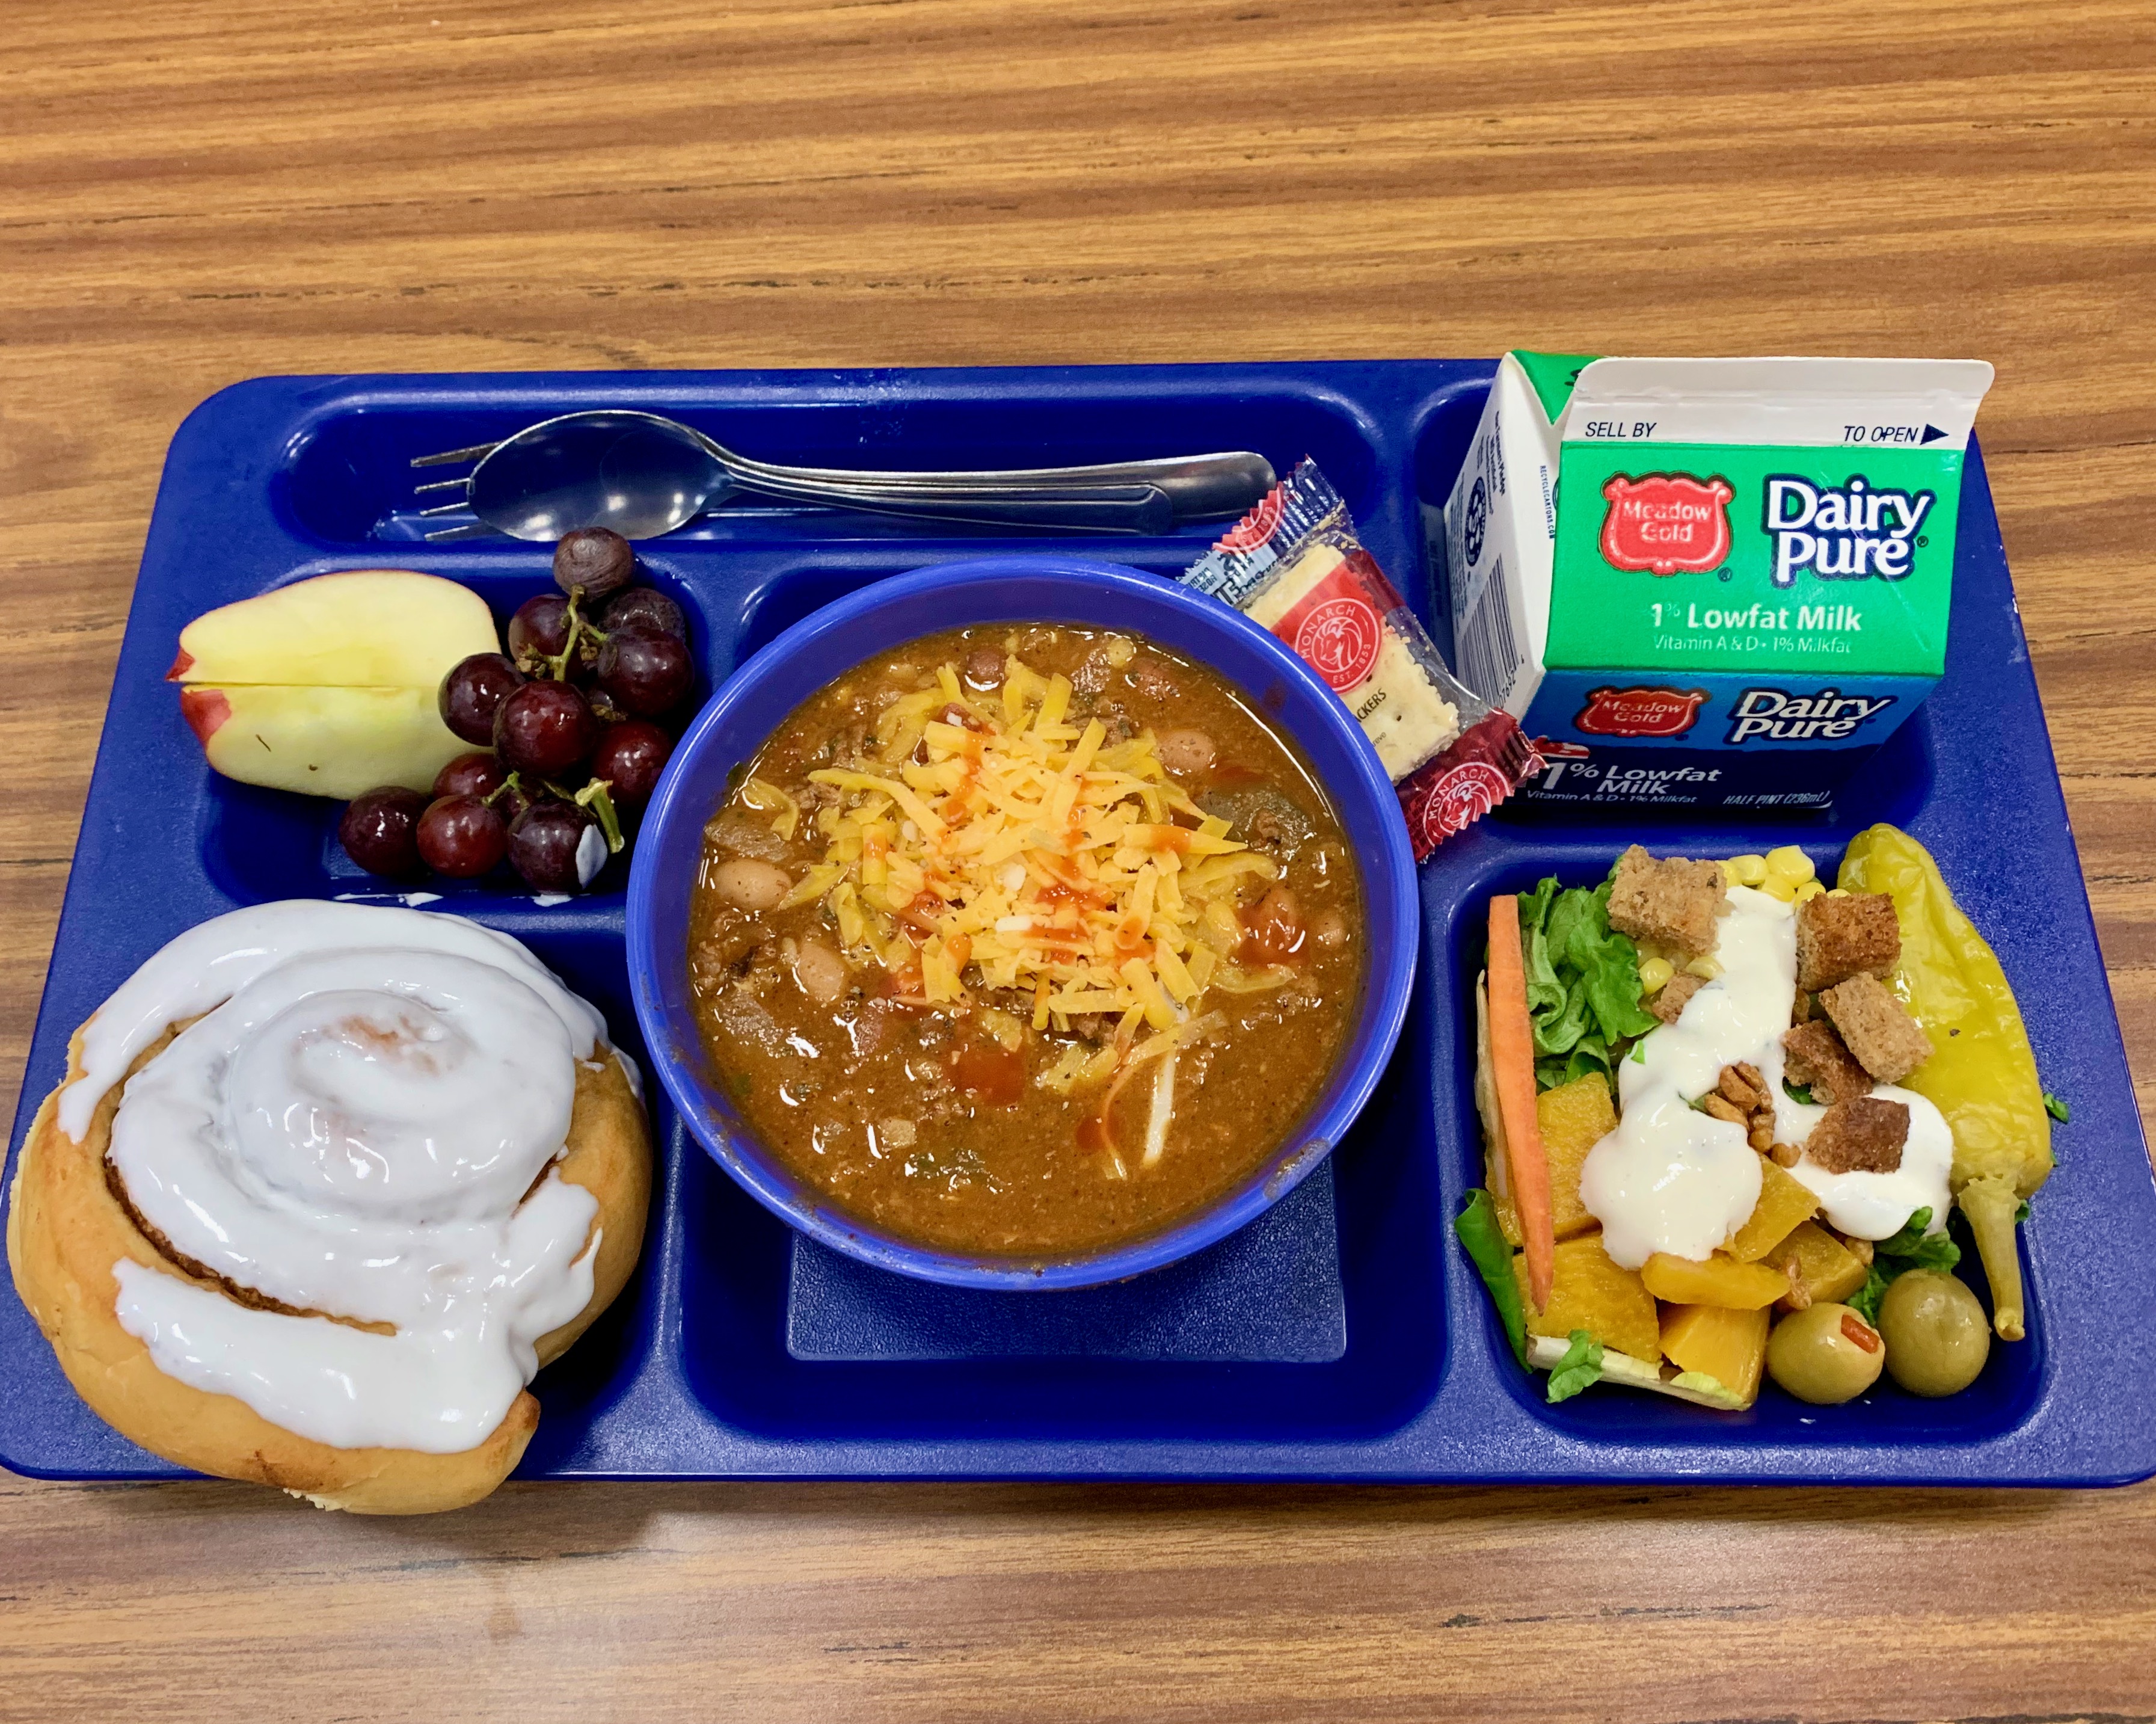 school lunch tray with chili, salad, fruit, milk, cinnamon roll